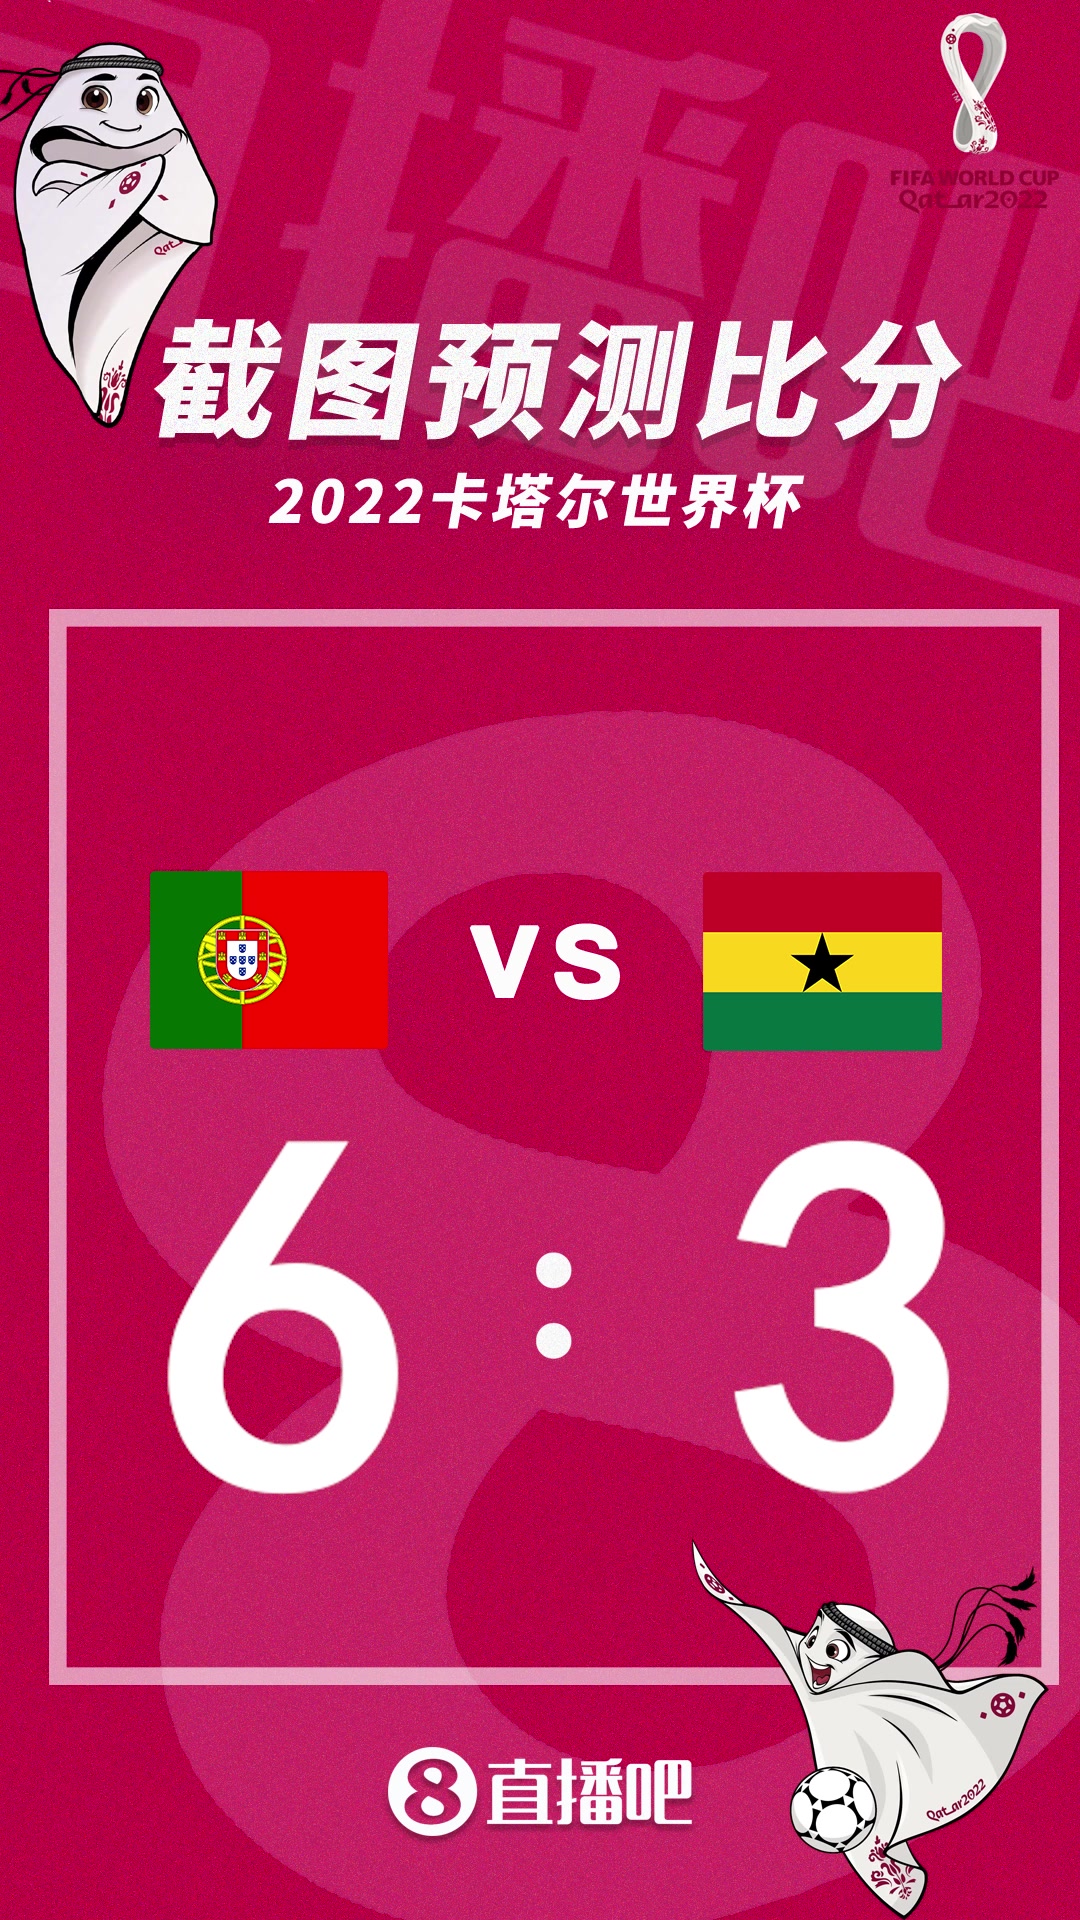 C罗出战！截图预测葡萄牙vs加纳比分